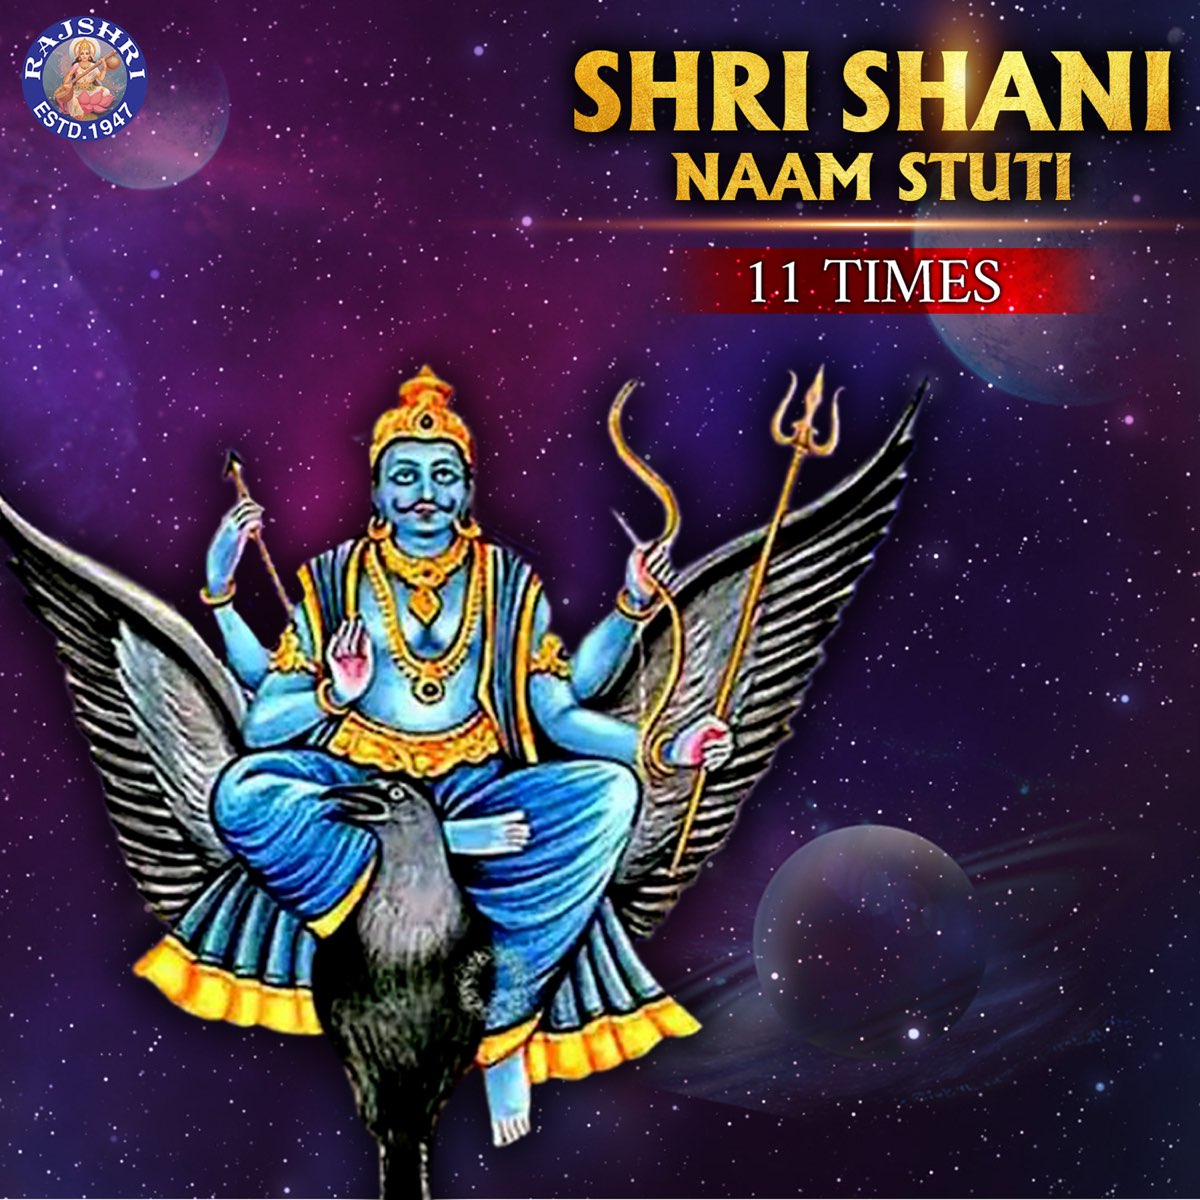 Shri Shani Naam Stuti 11 Times - EP by Mangesh Borgaonkar on Apple Music